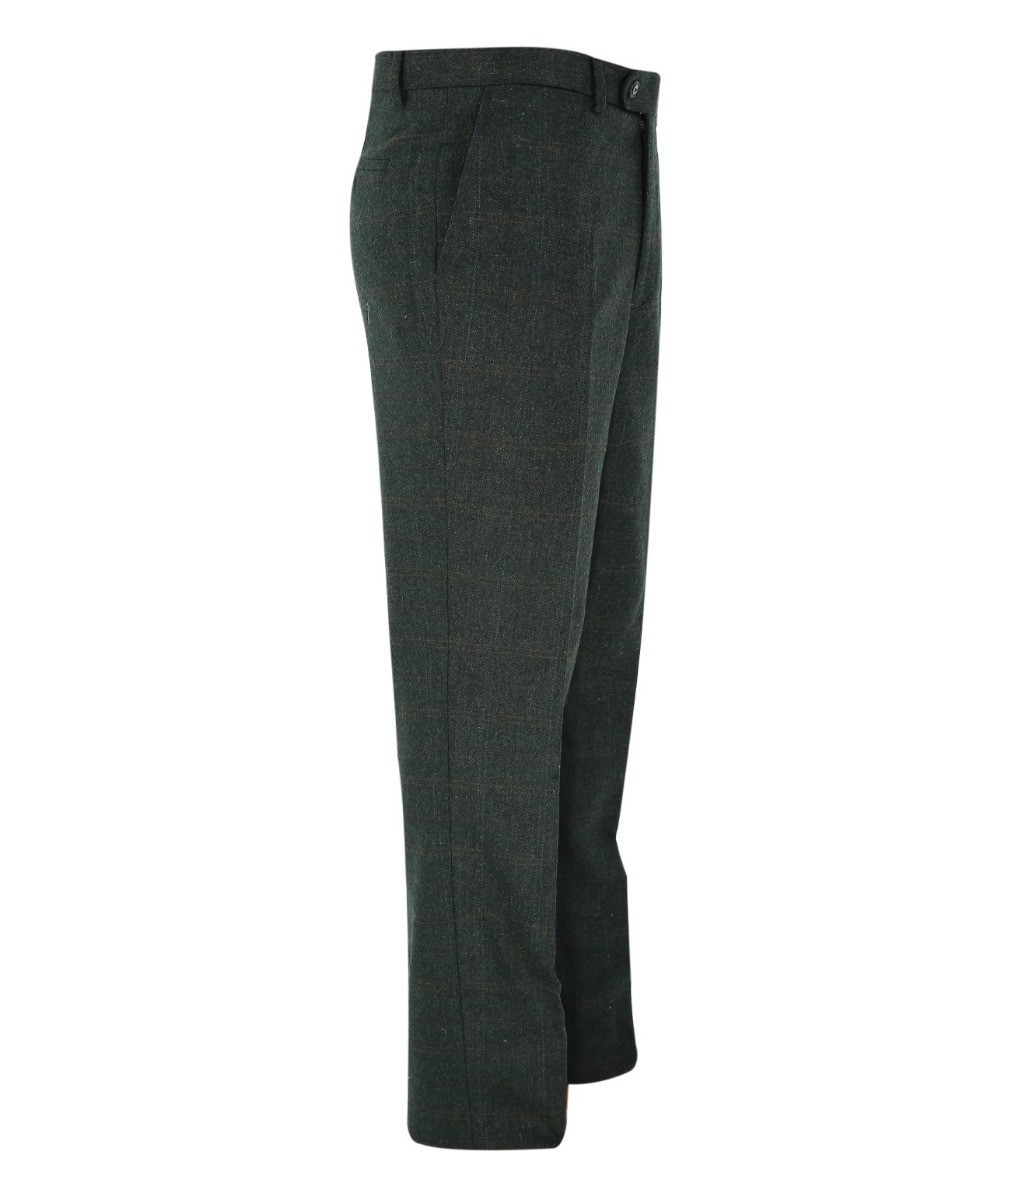 Men's Tweed Check Tailored Fit Pants - JOSHUA Green